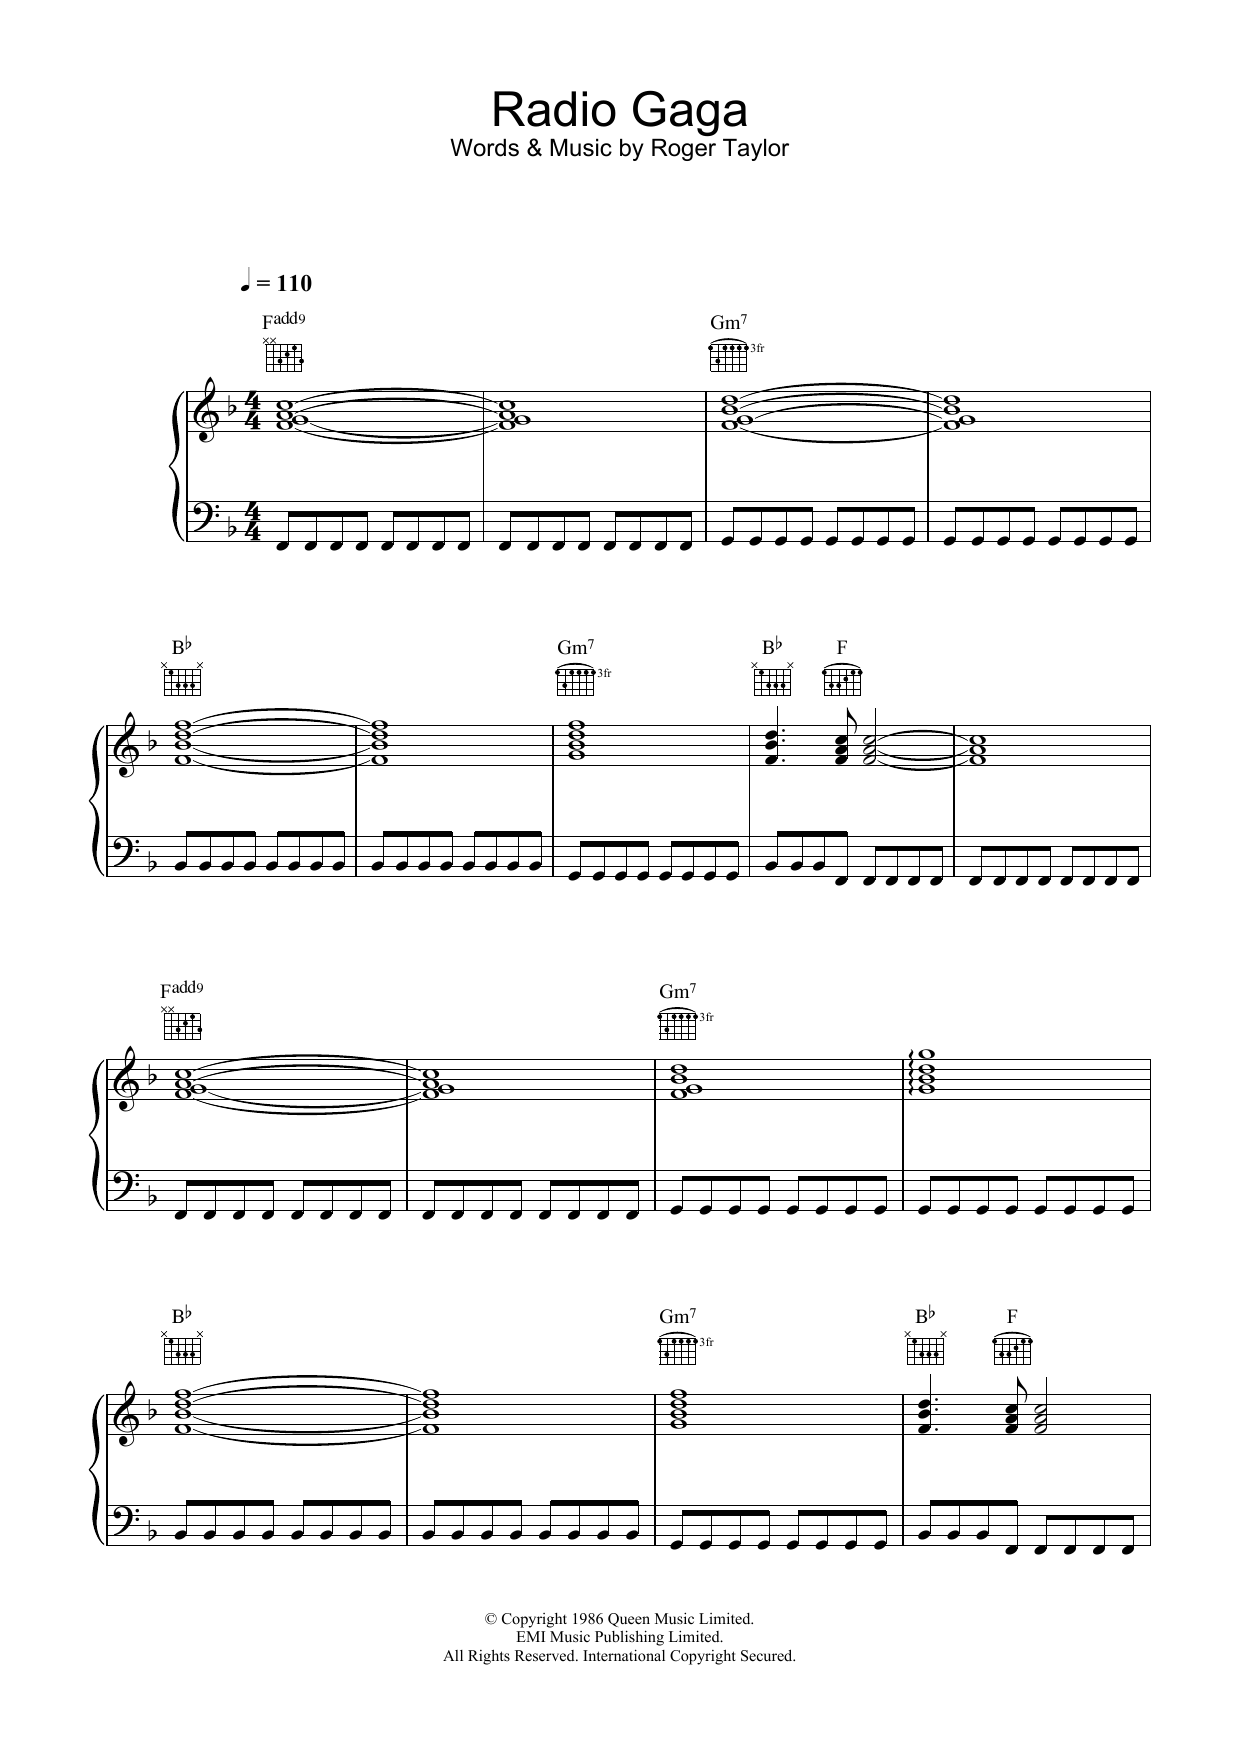 Queen Radio Gaga Sheet Music Notes & Chords for Melody Line, Lyrics & Chords - Download or Print PDF